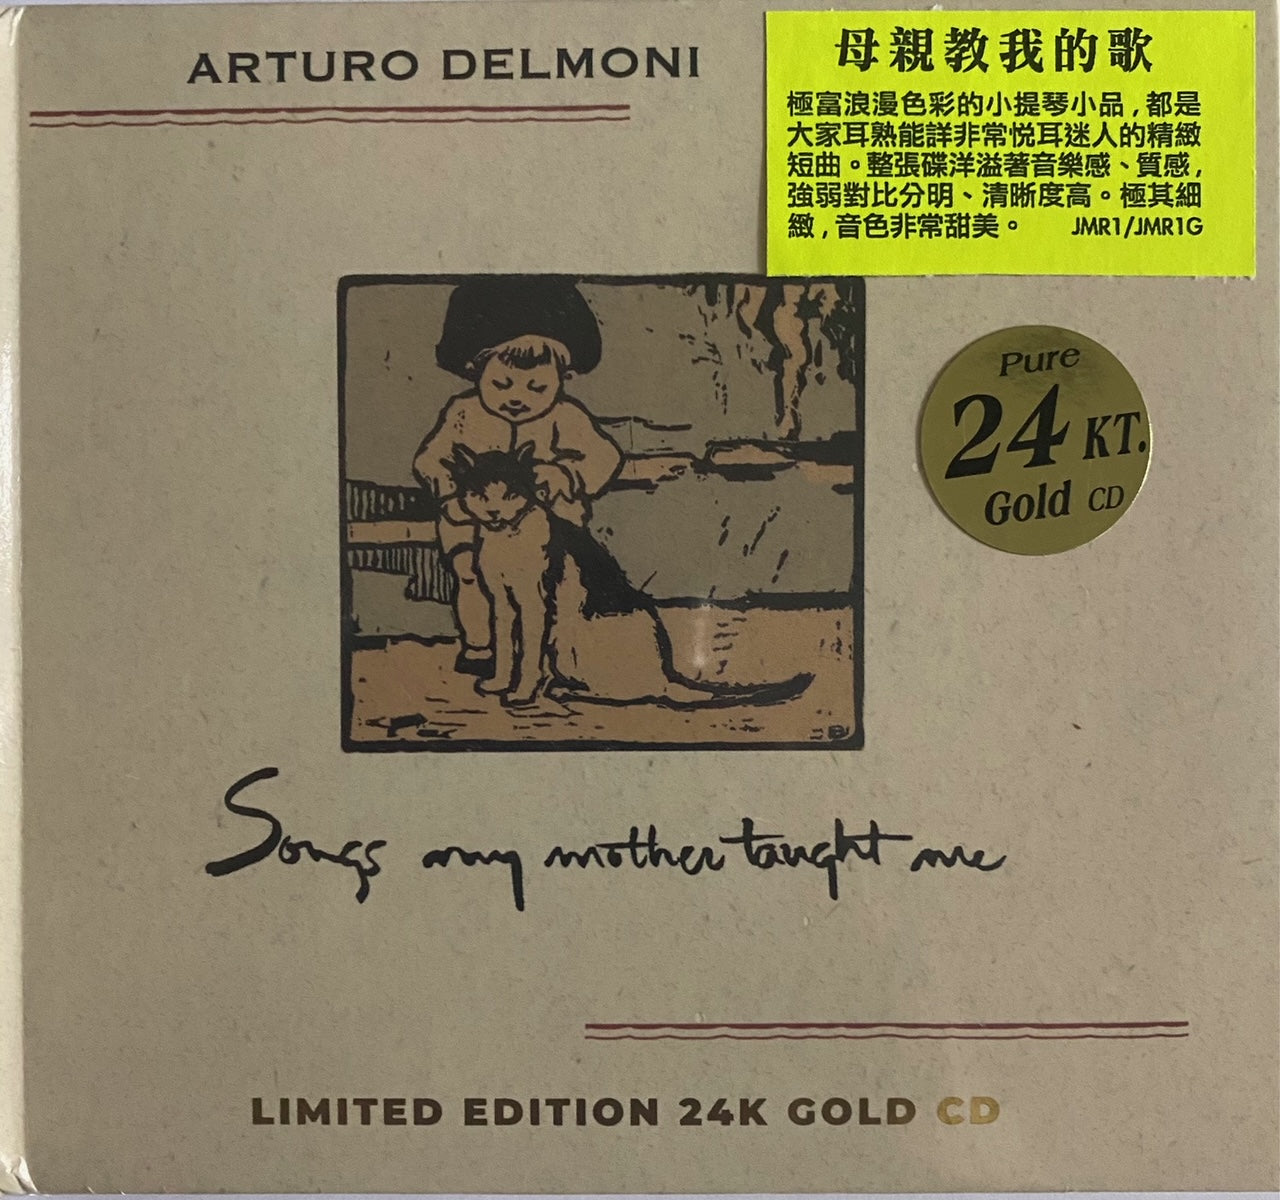 AUTURO DELMONI - SONGS MY MOTHER TAUGHE ME (24KGOLD) CD